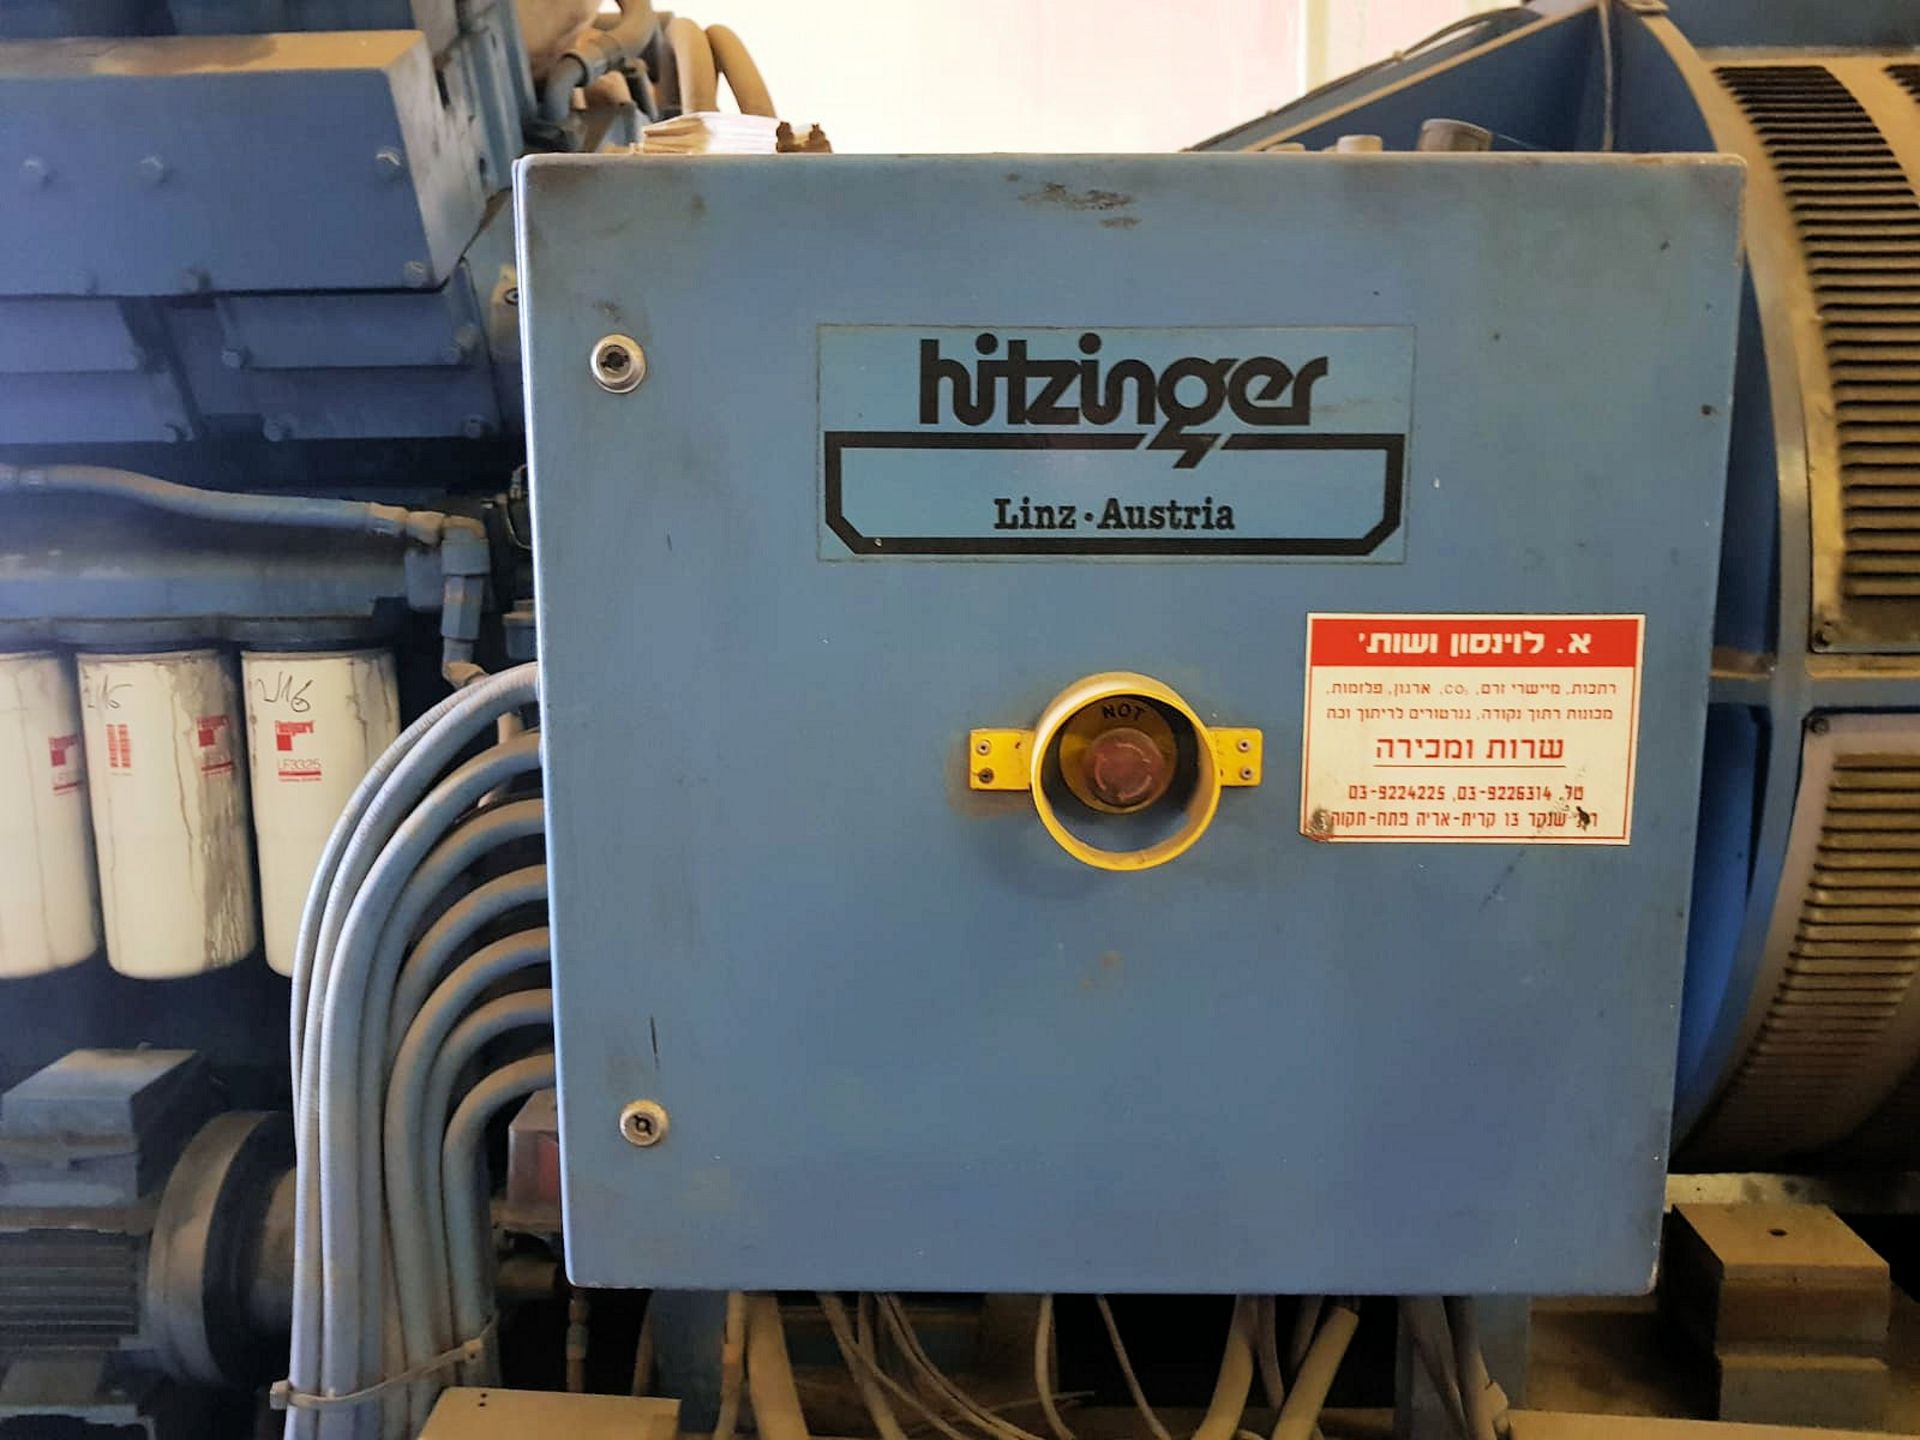 1 x 1987 Hitzinger SGS 9D 040 Generator - Only 800 Hours Use - Ref: T4UB/HZ - CL333 - Location: - Bild 6 aus 20